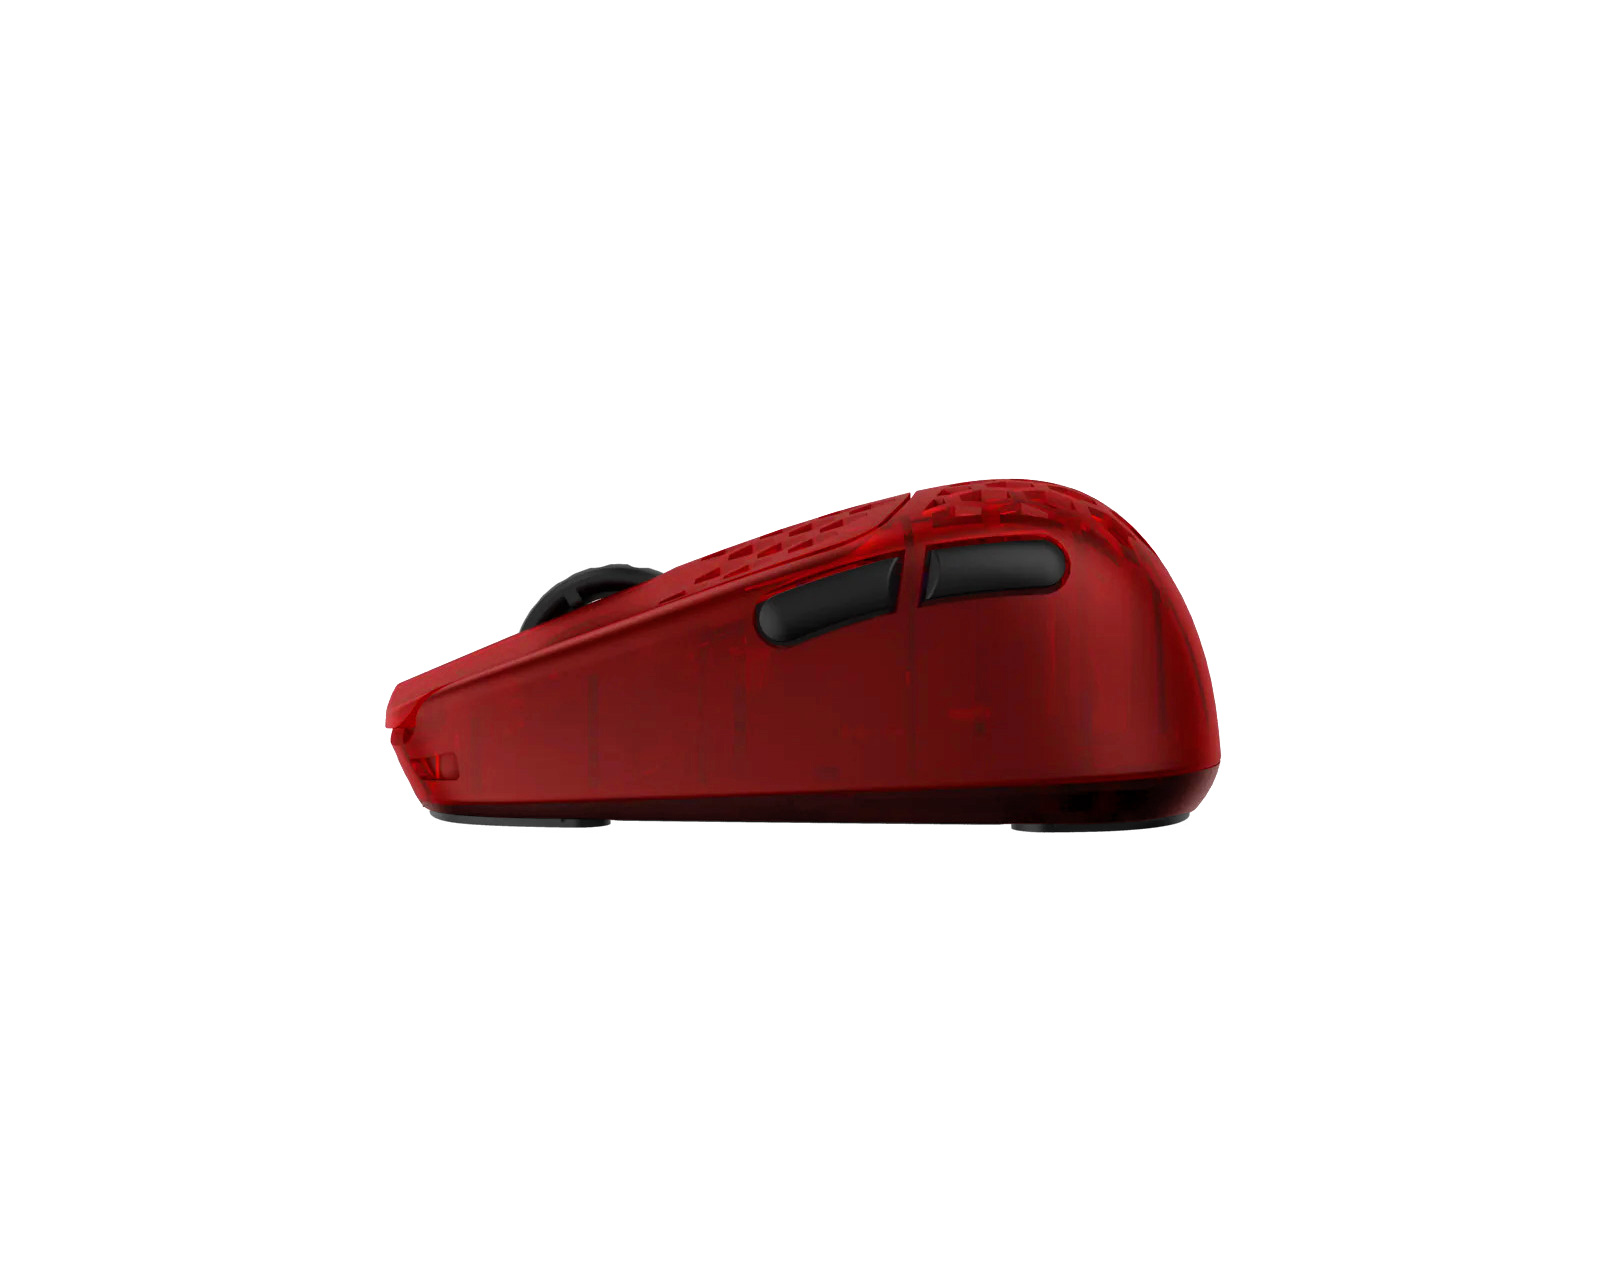 G-Wolves HSK Pro 4K Wireless Mouse Fingertip - Ruby Red